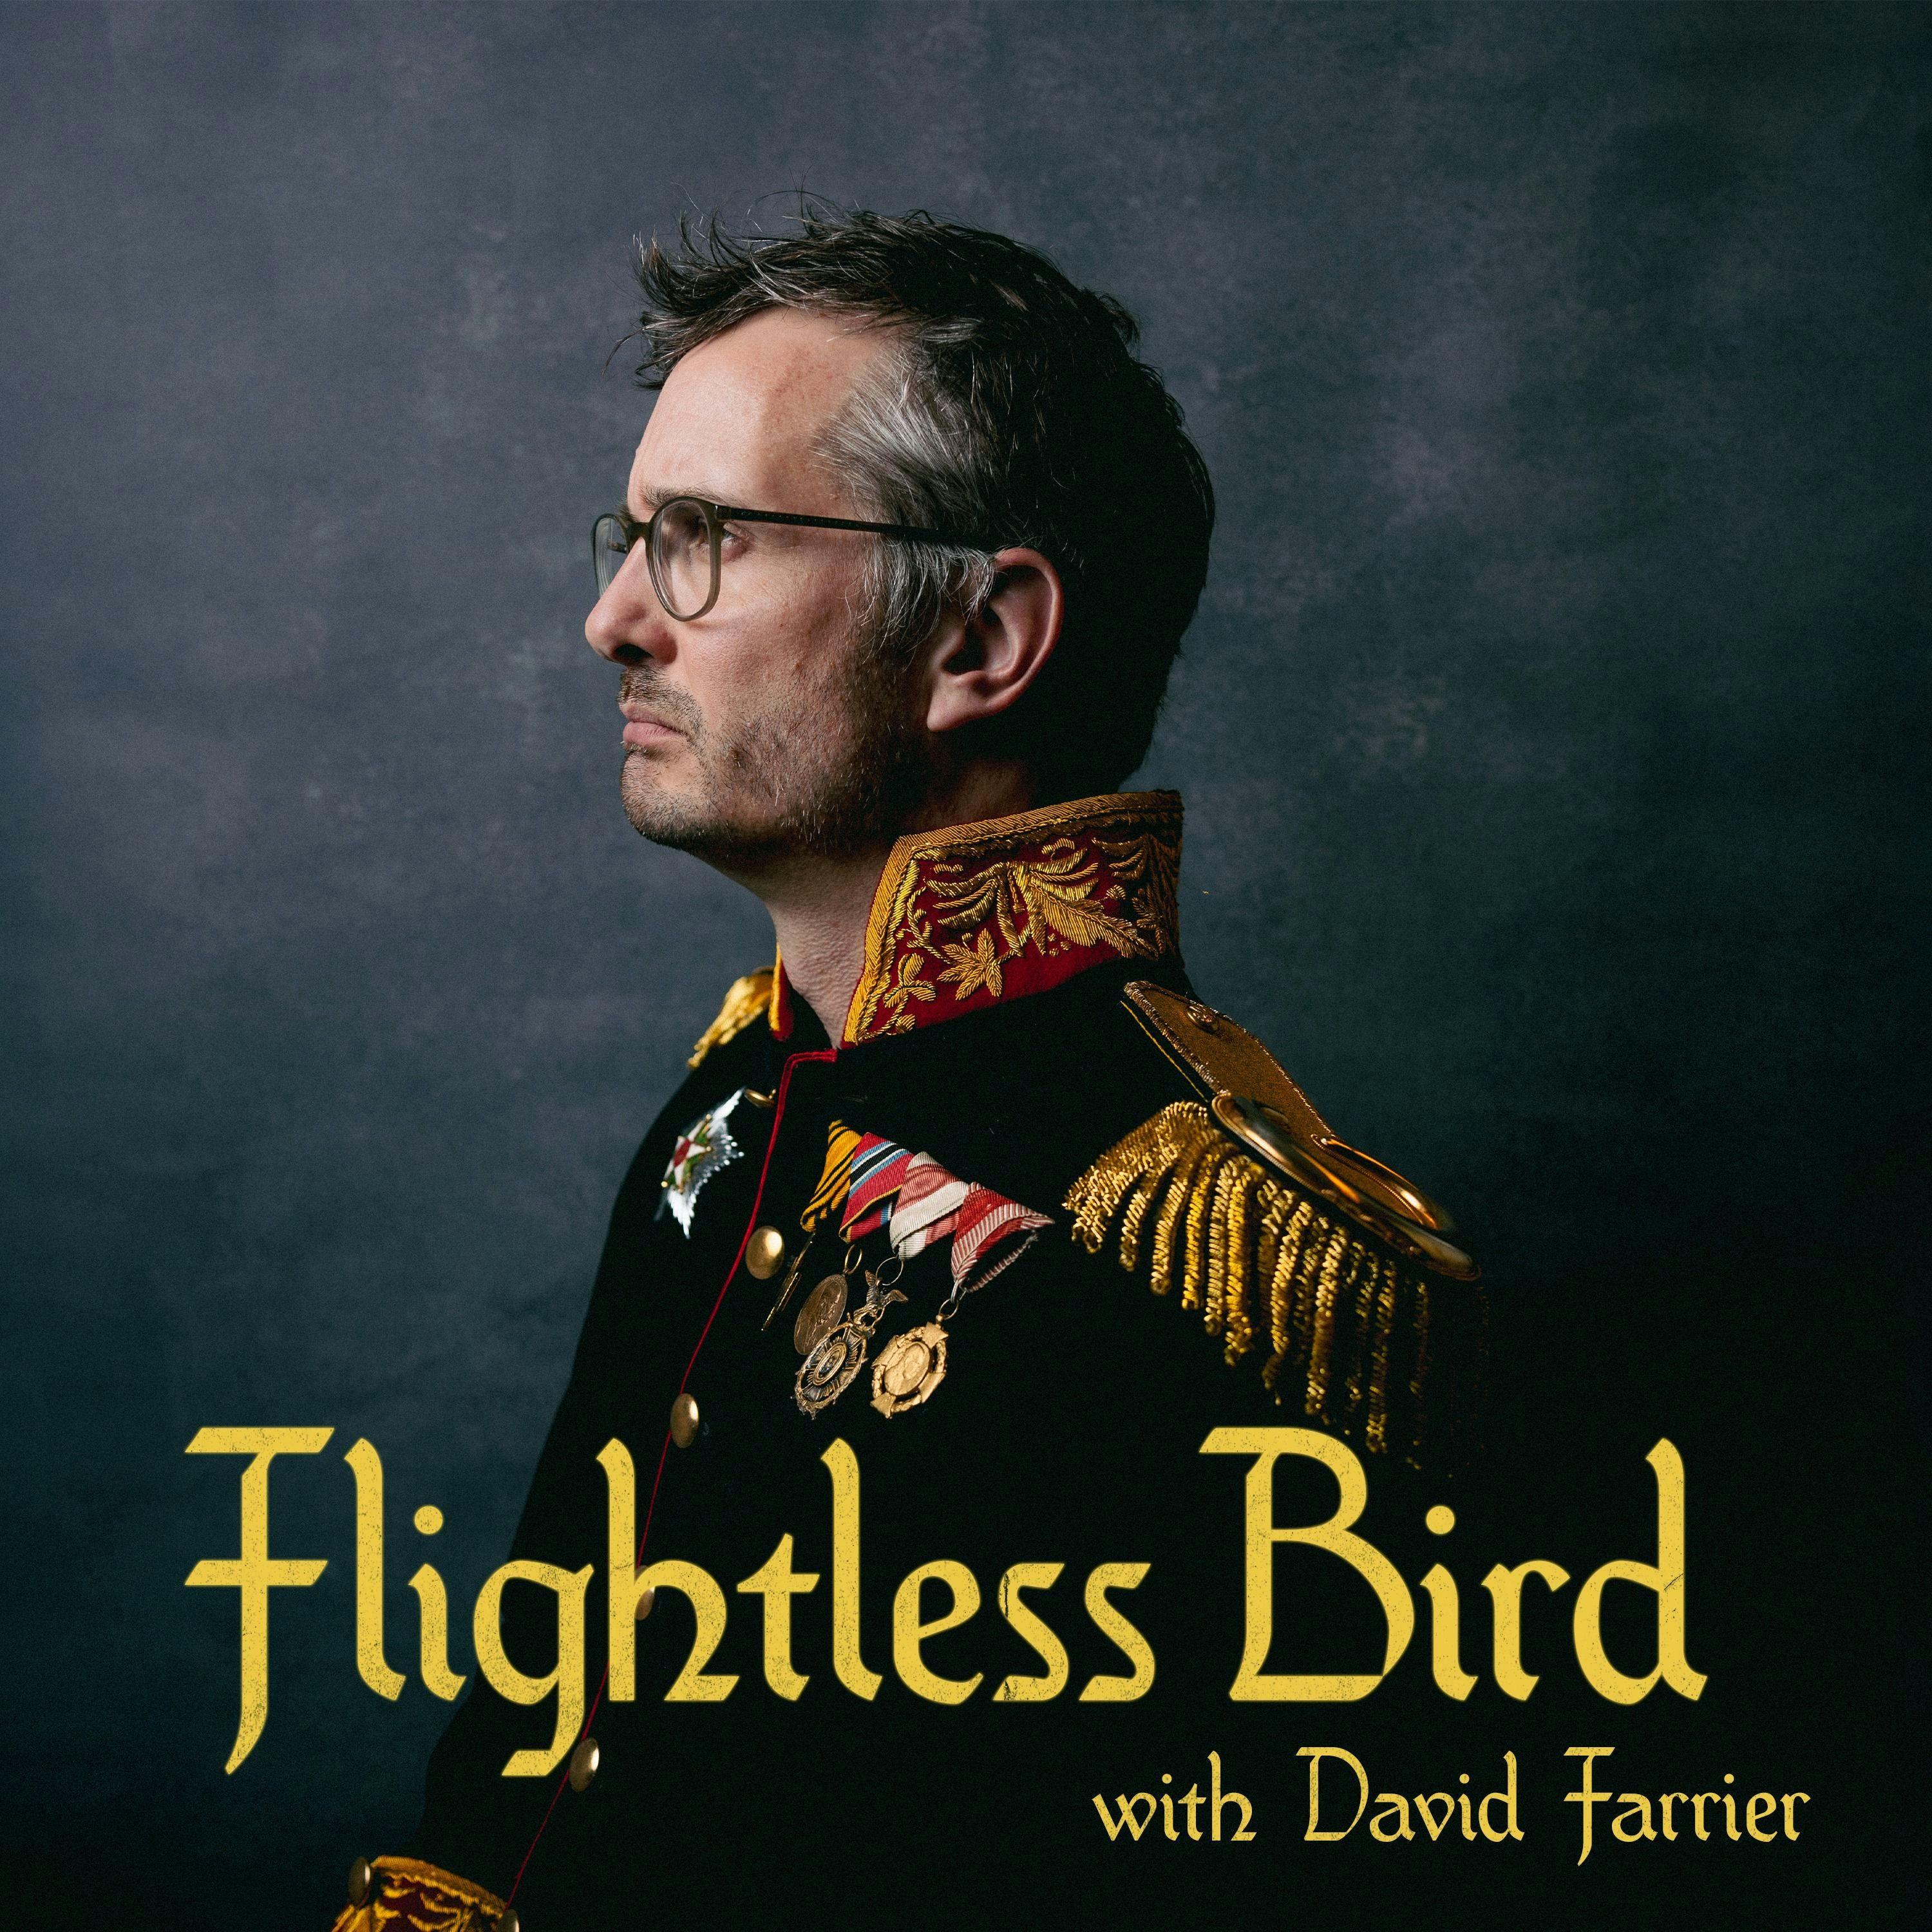 Flightless Bird: The Villages